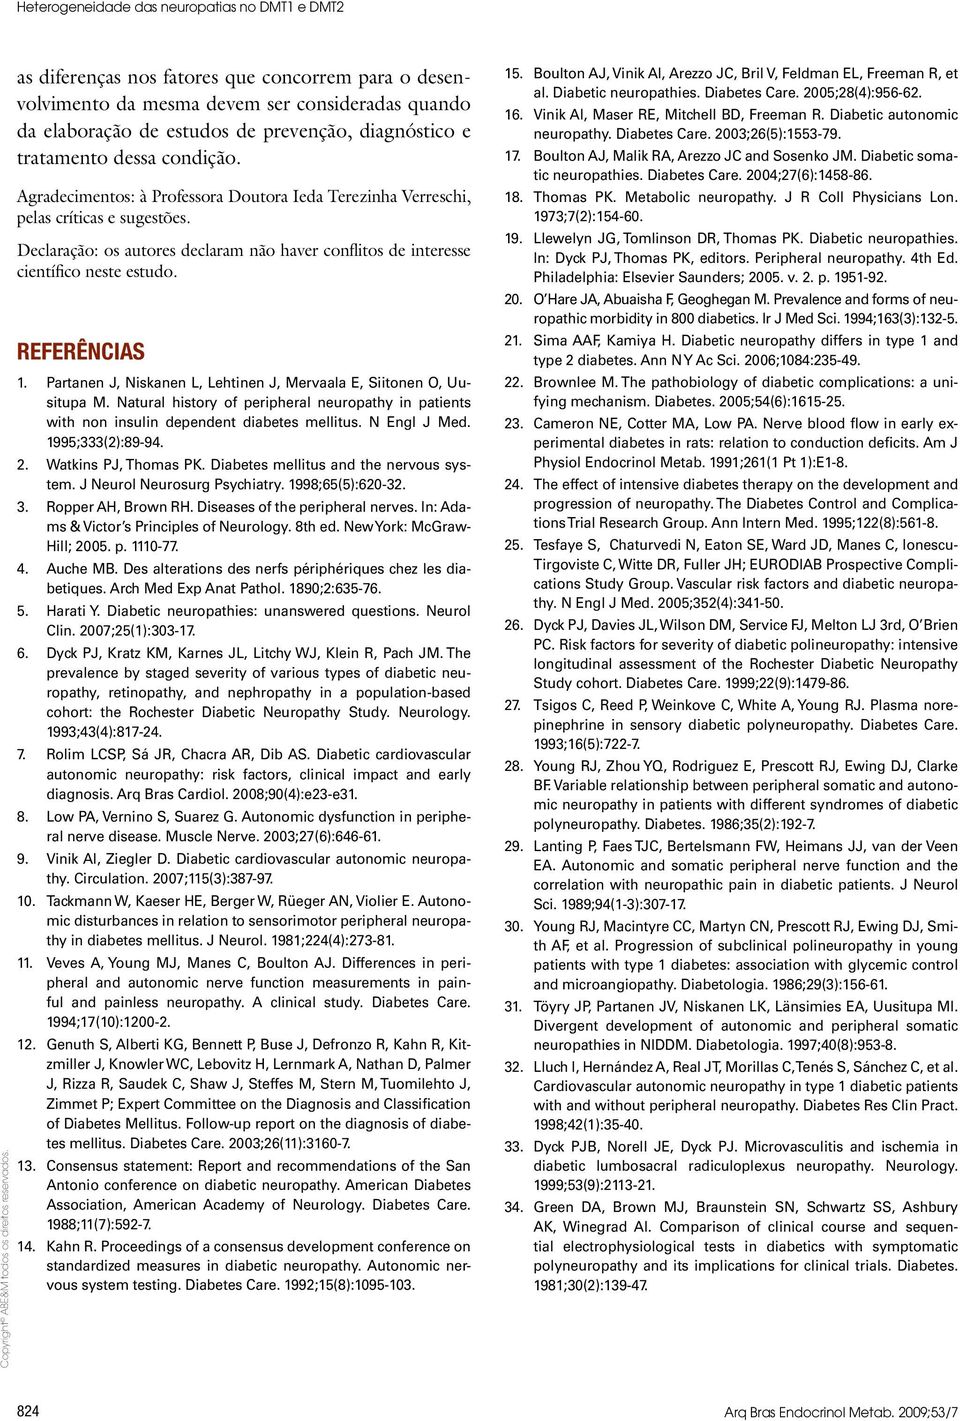 Partanen J, Niskanen L, Lehtinen J, Mervaala E, Siitonen O, Uusitupa M. Natural history of peripheral neuropathy in patients with non insulin dependent diabetes mellitus. N Engl J Med.